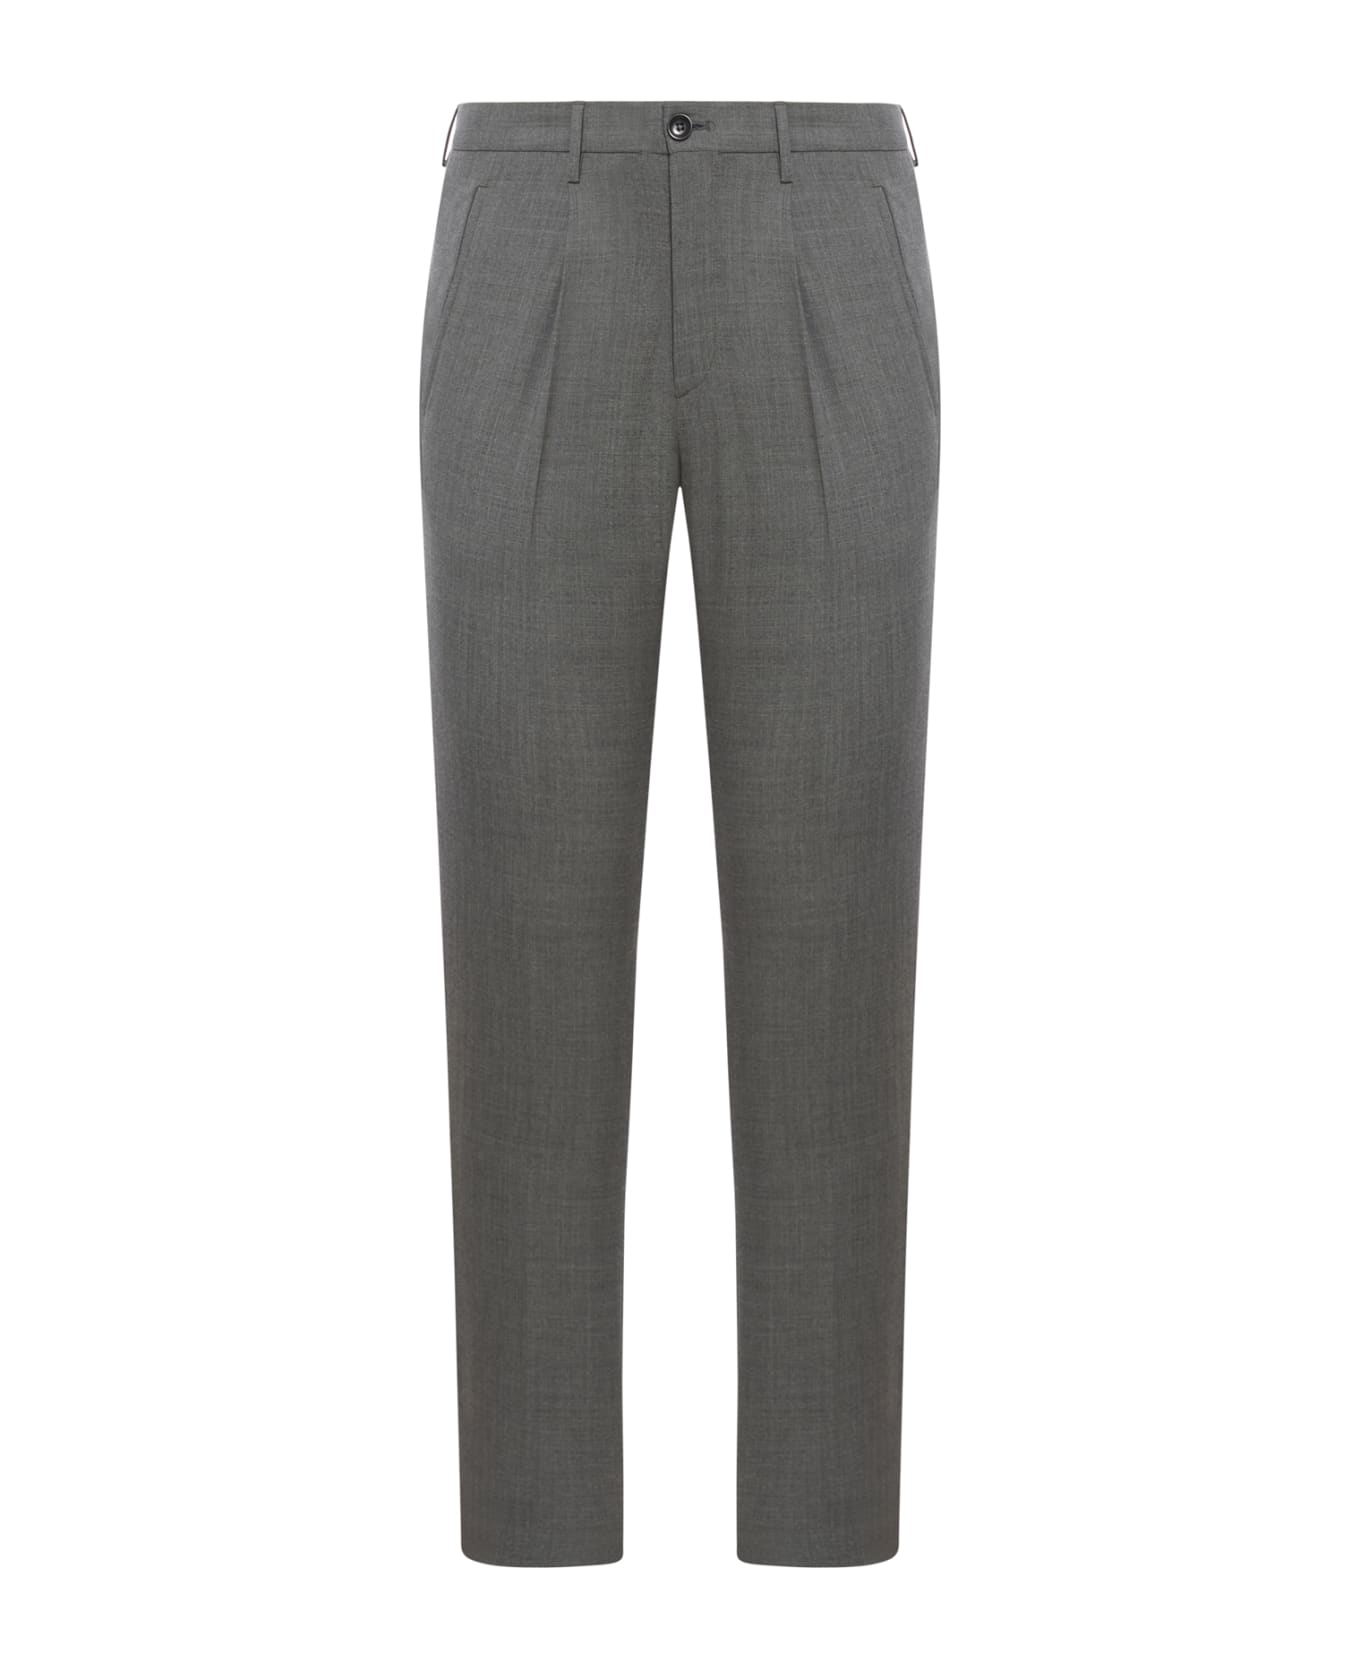 Incotex Pants - Medium Grey